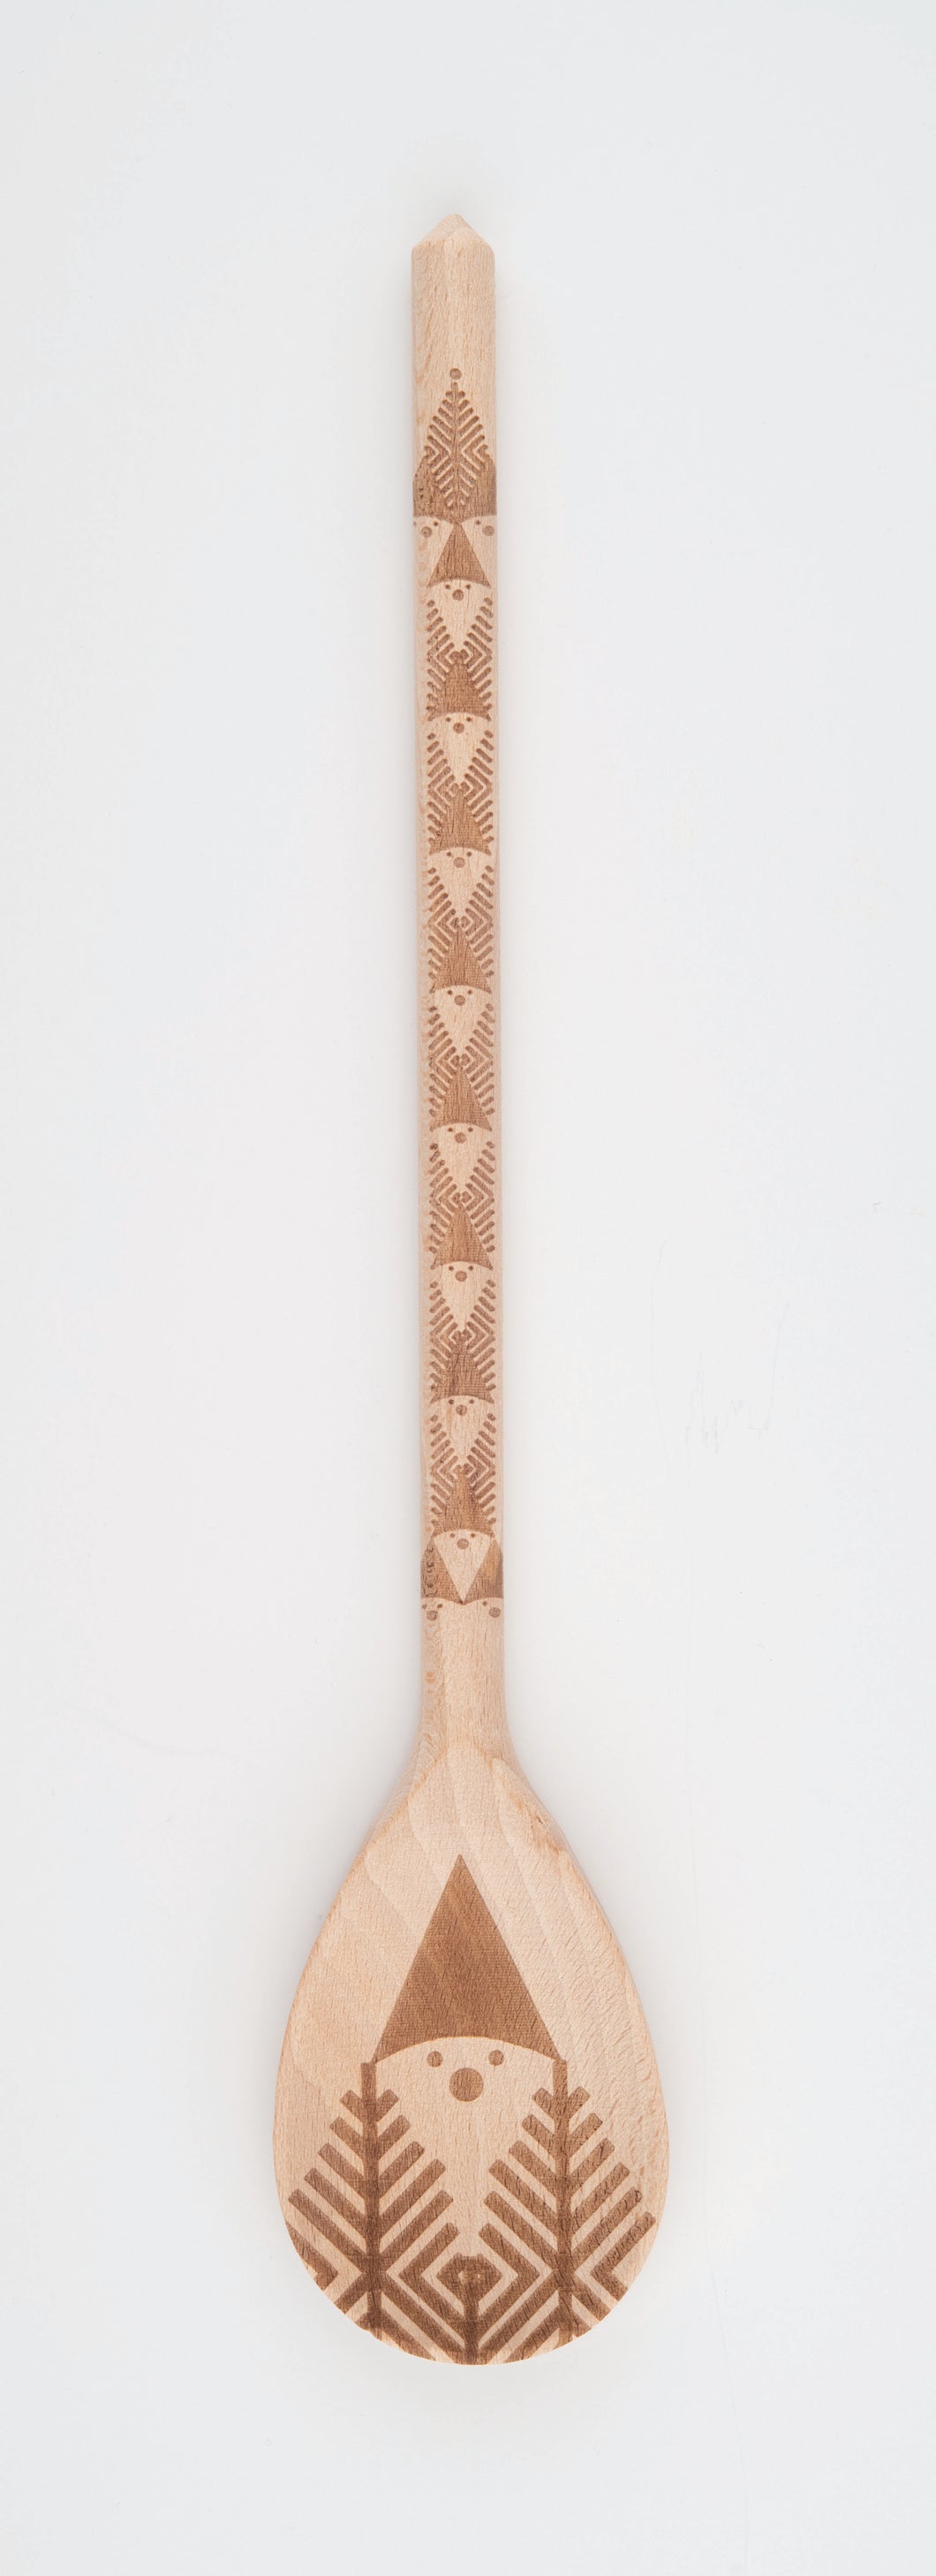 Engraved Wooden Spoon – Santa